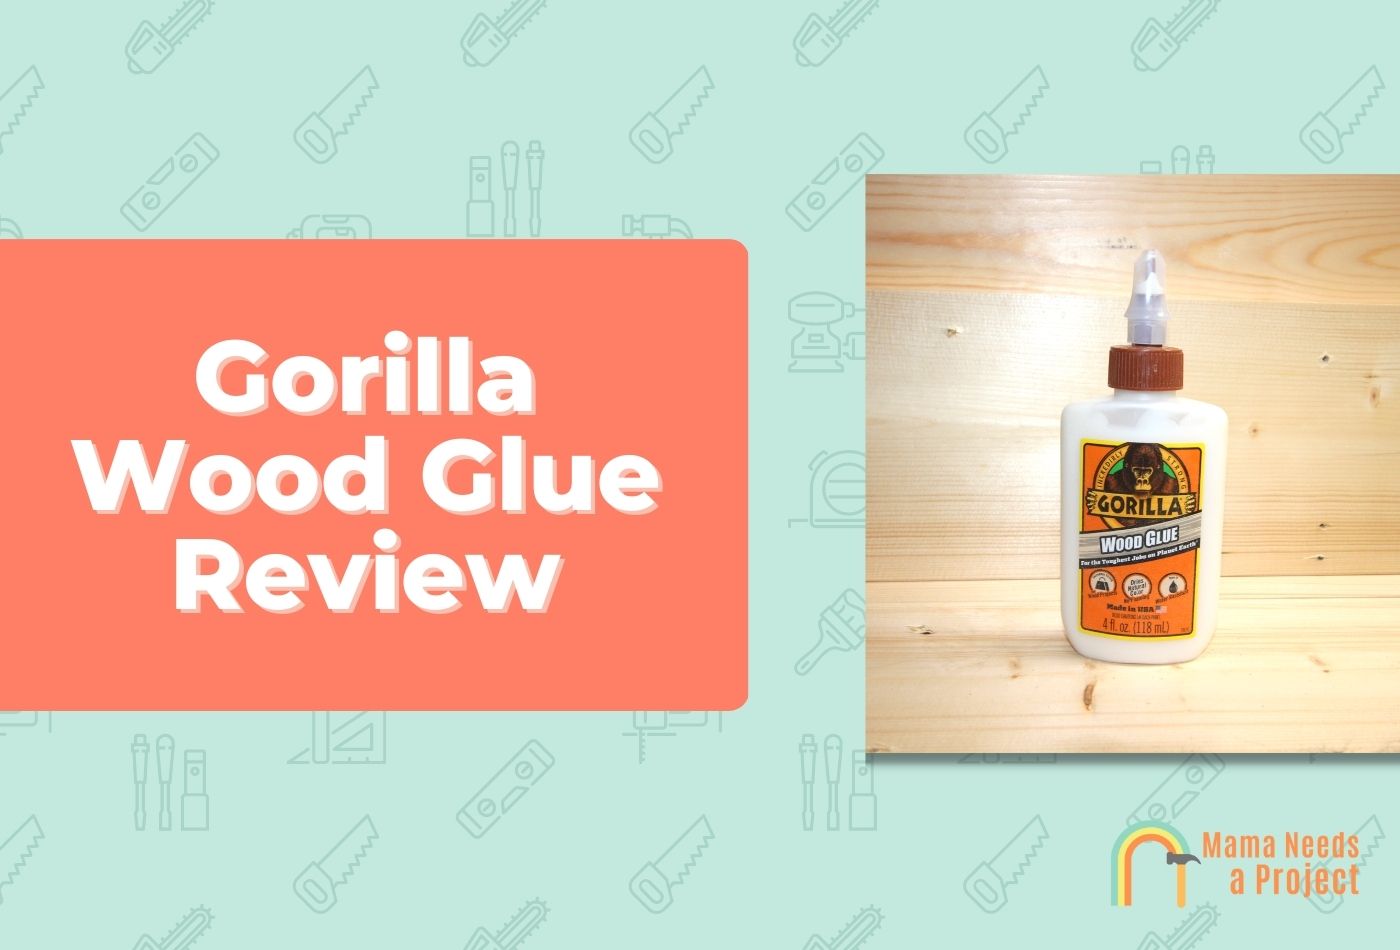 Gorilla Wood Glue Review